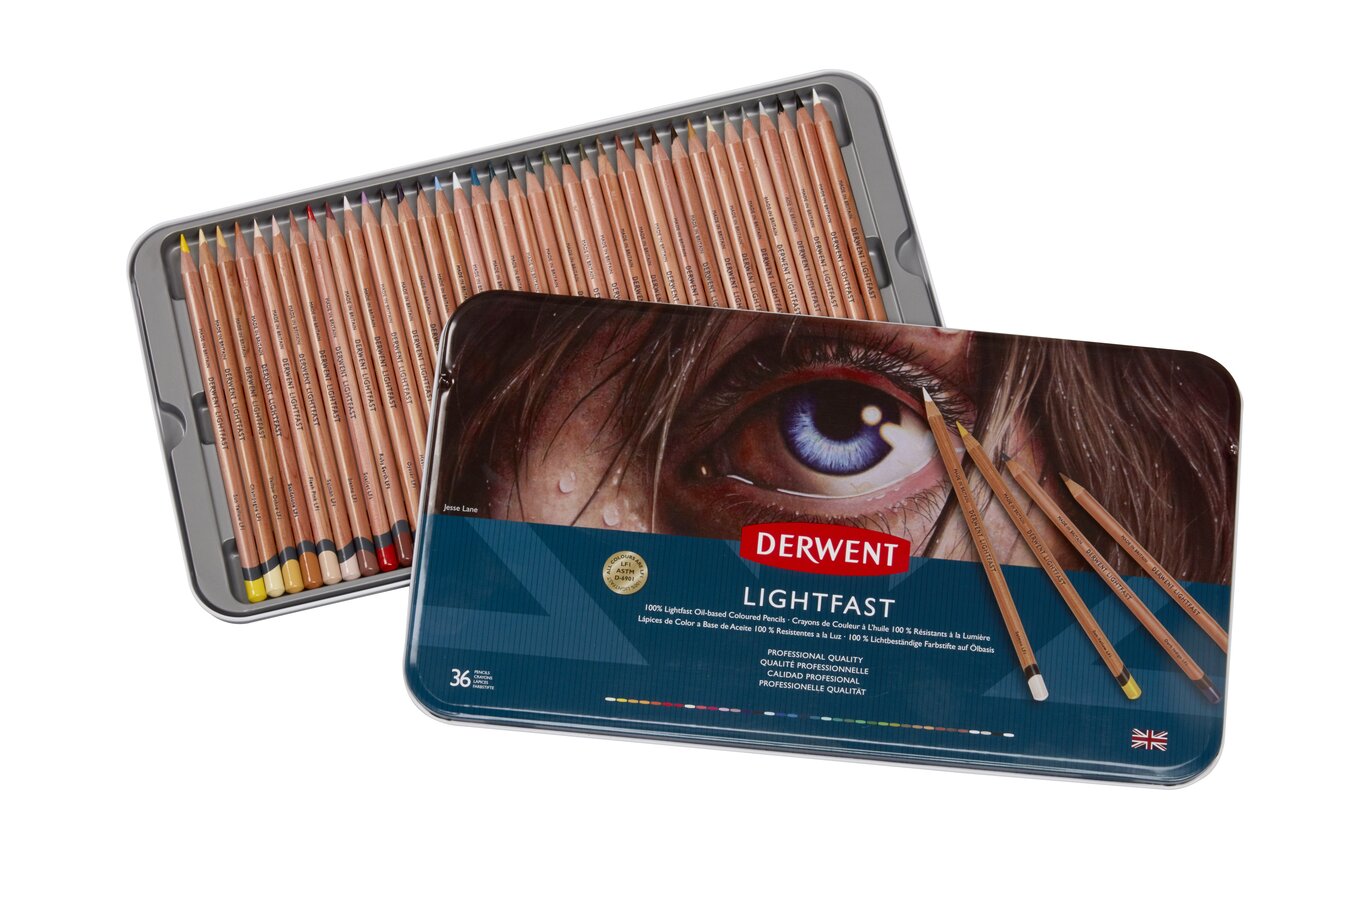 Derwent Lightfast Colored Pencil Reveiw & Tips